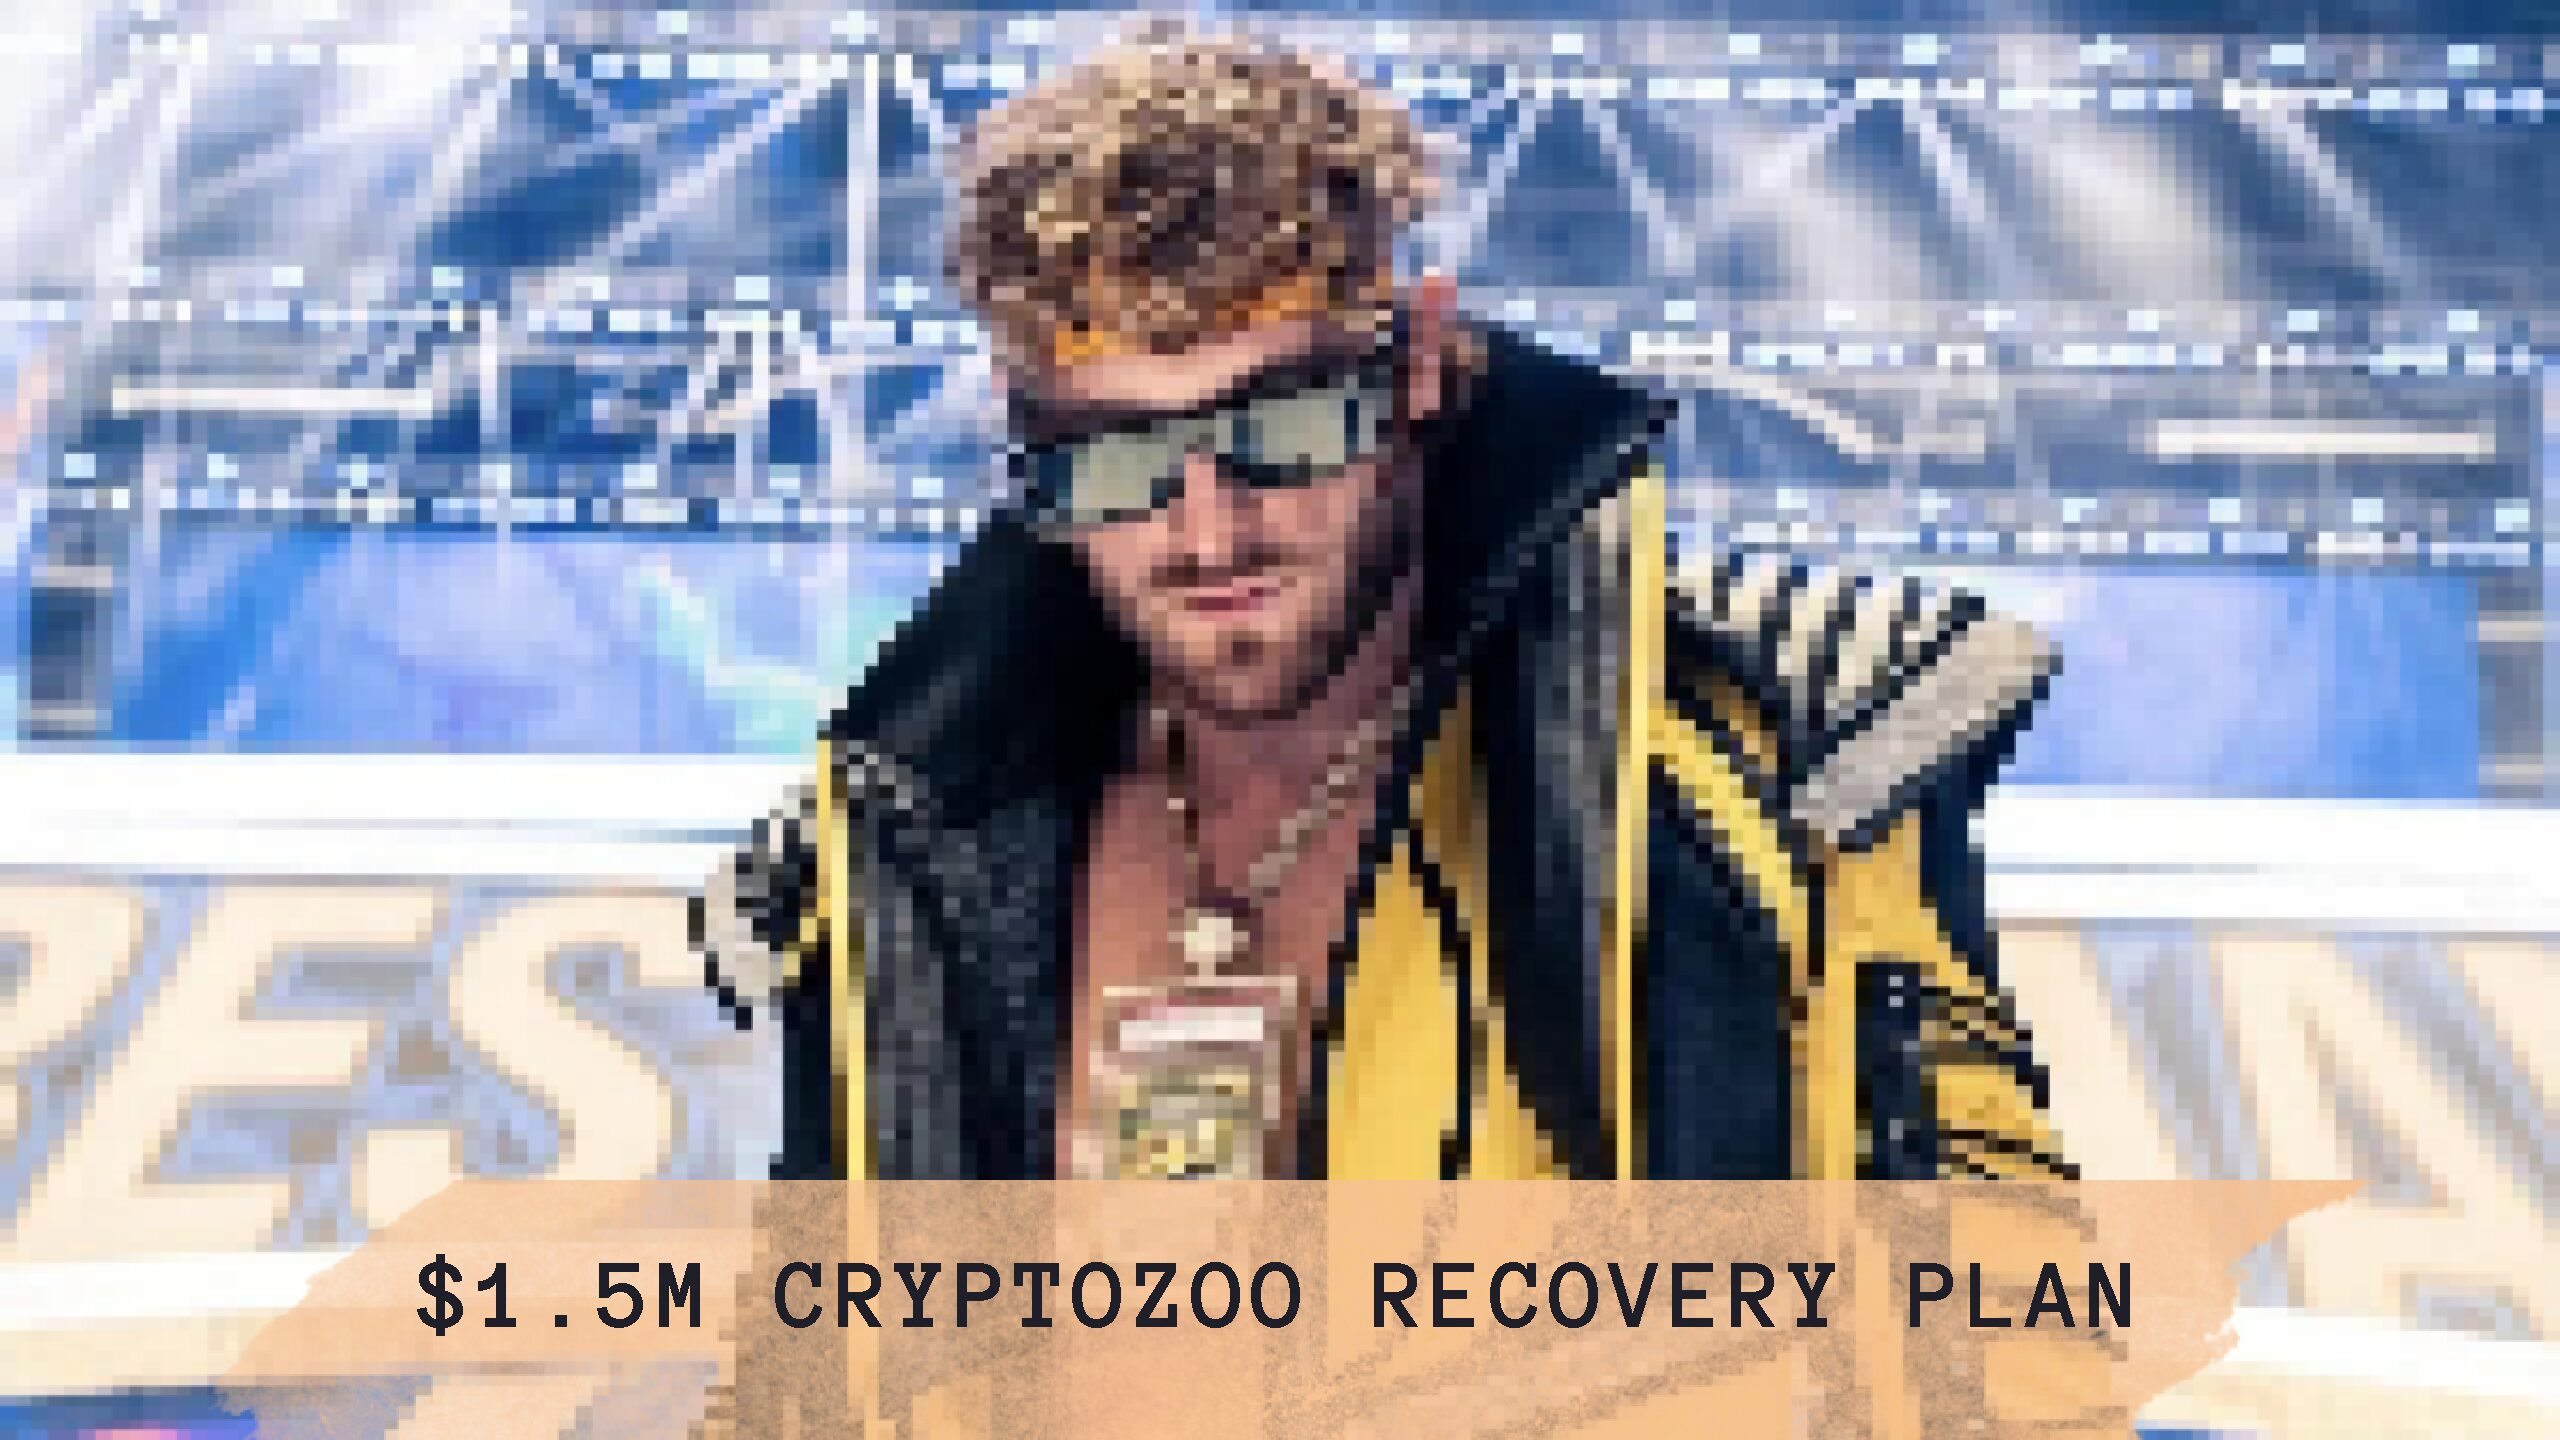 Logan Paul unveils $1.5M CryptoZoo recovery plan